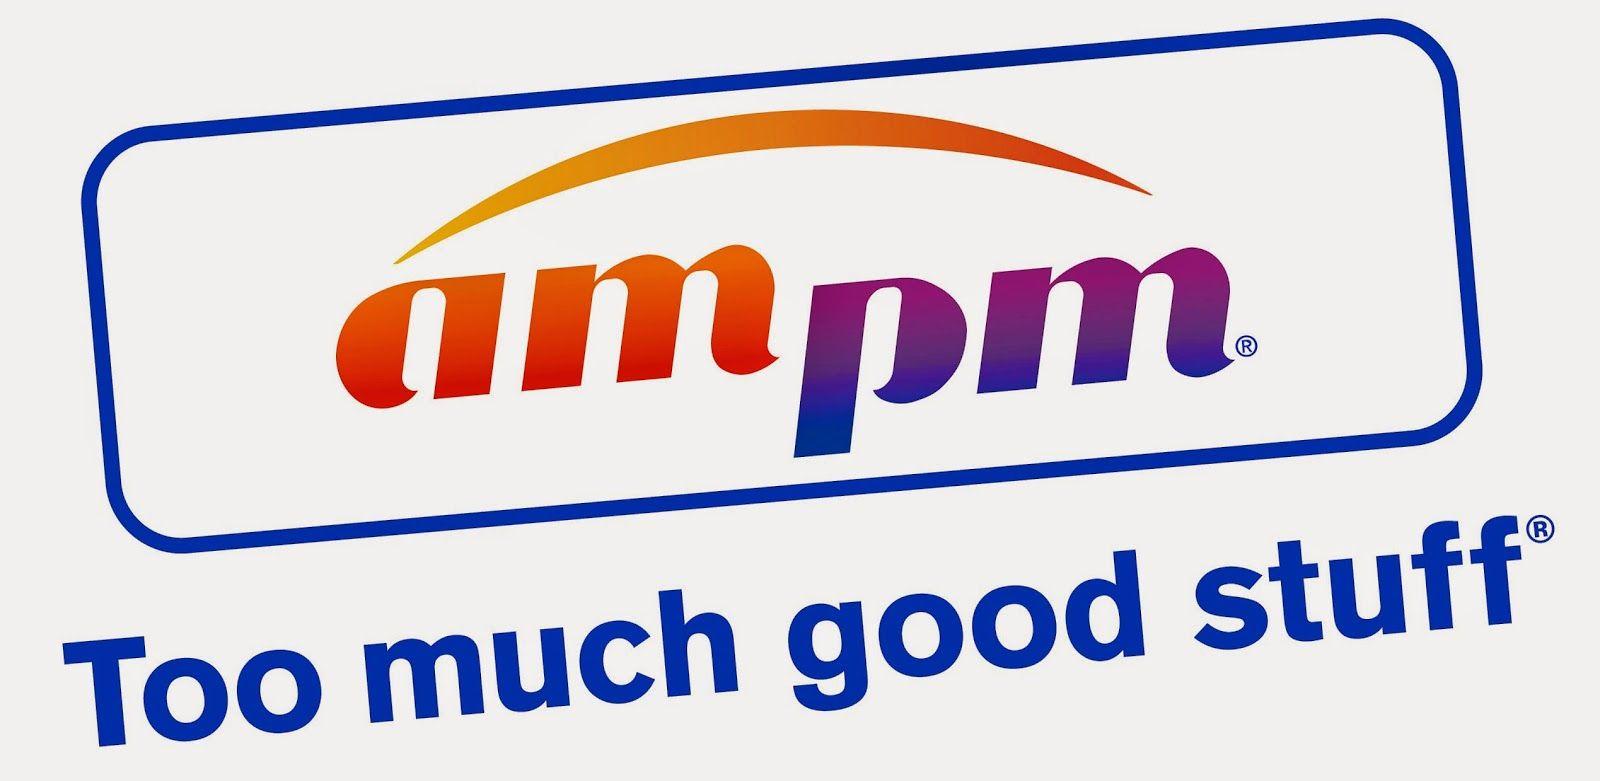 Ampm Logo - AM PM too much good stuff